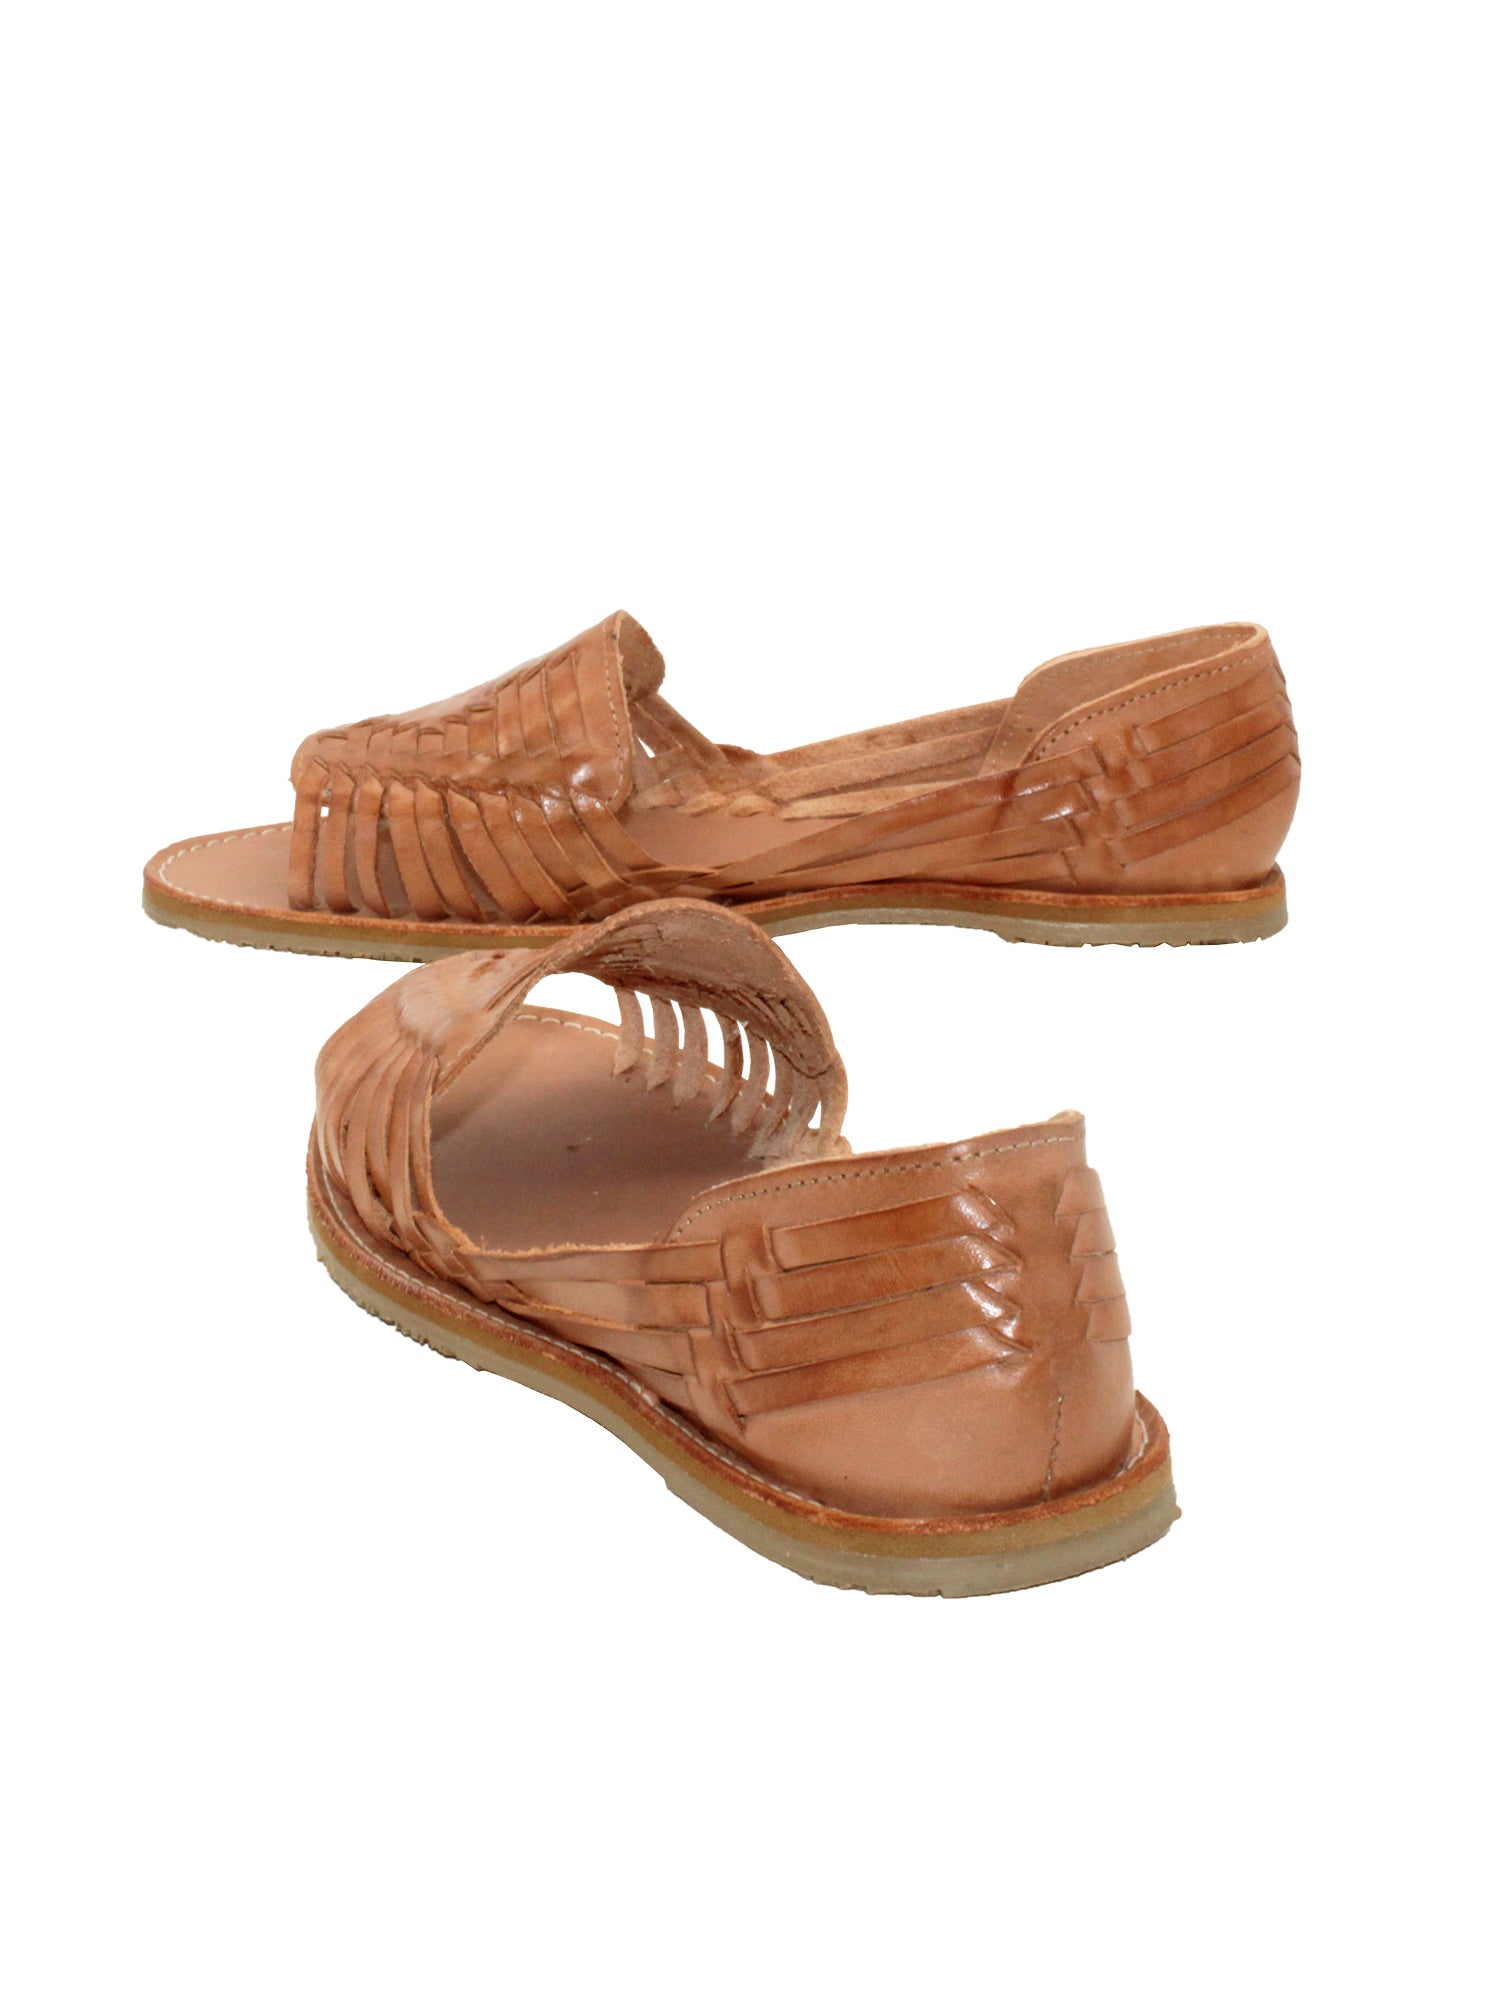 Naturalizer Huarache Sandals “Westerly” in Fiesta Size 9.5 M Open Toe  Slingback | eBay